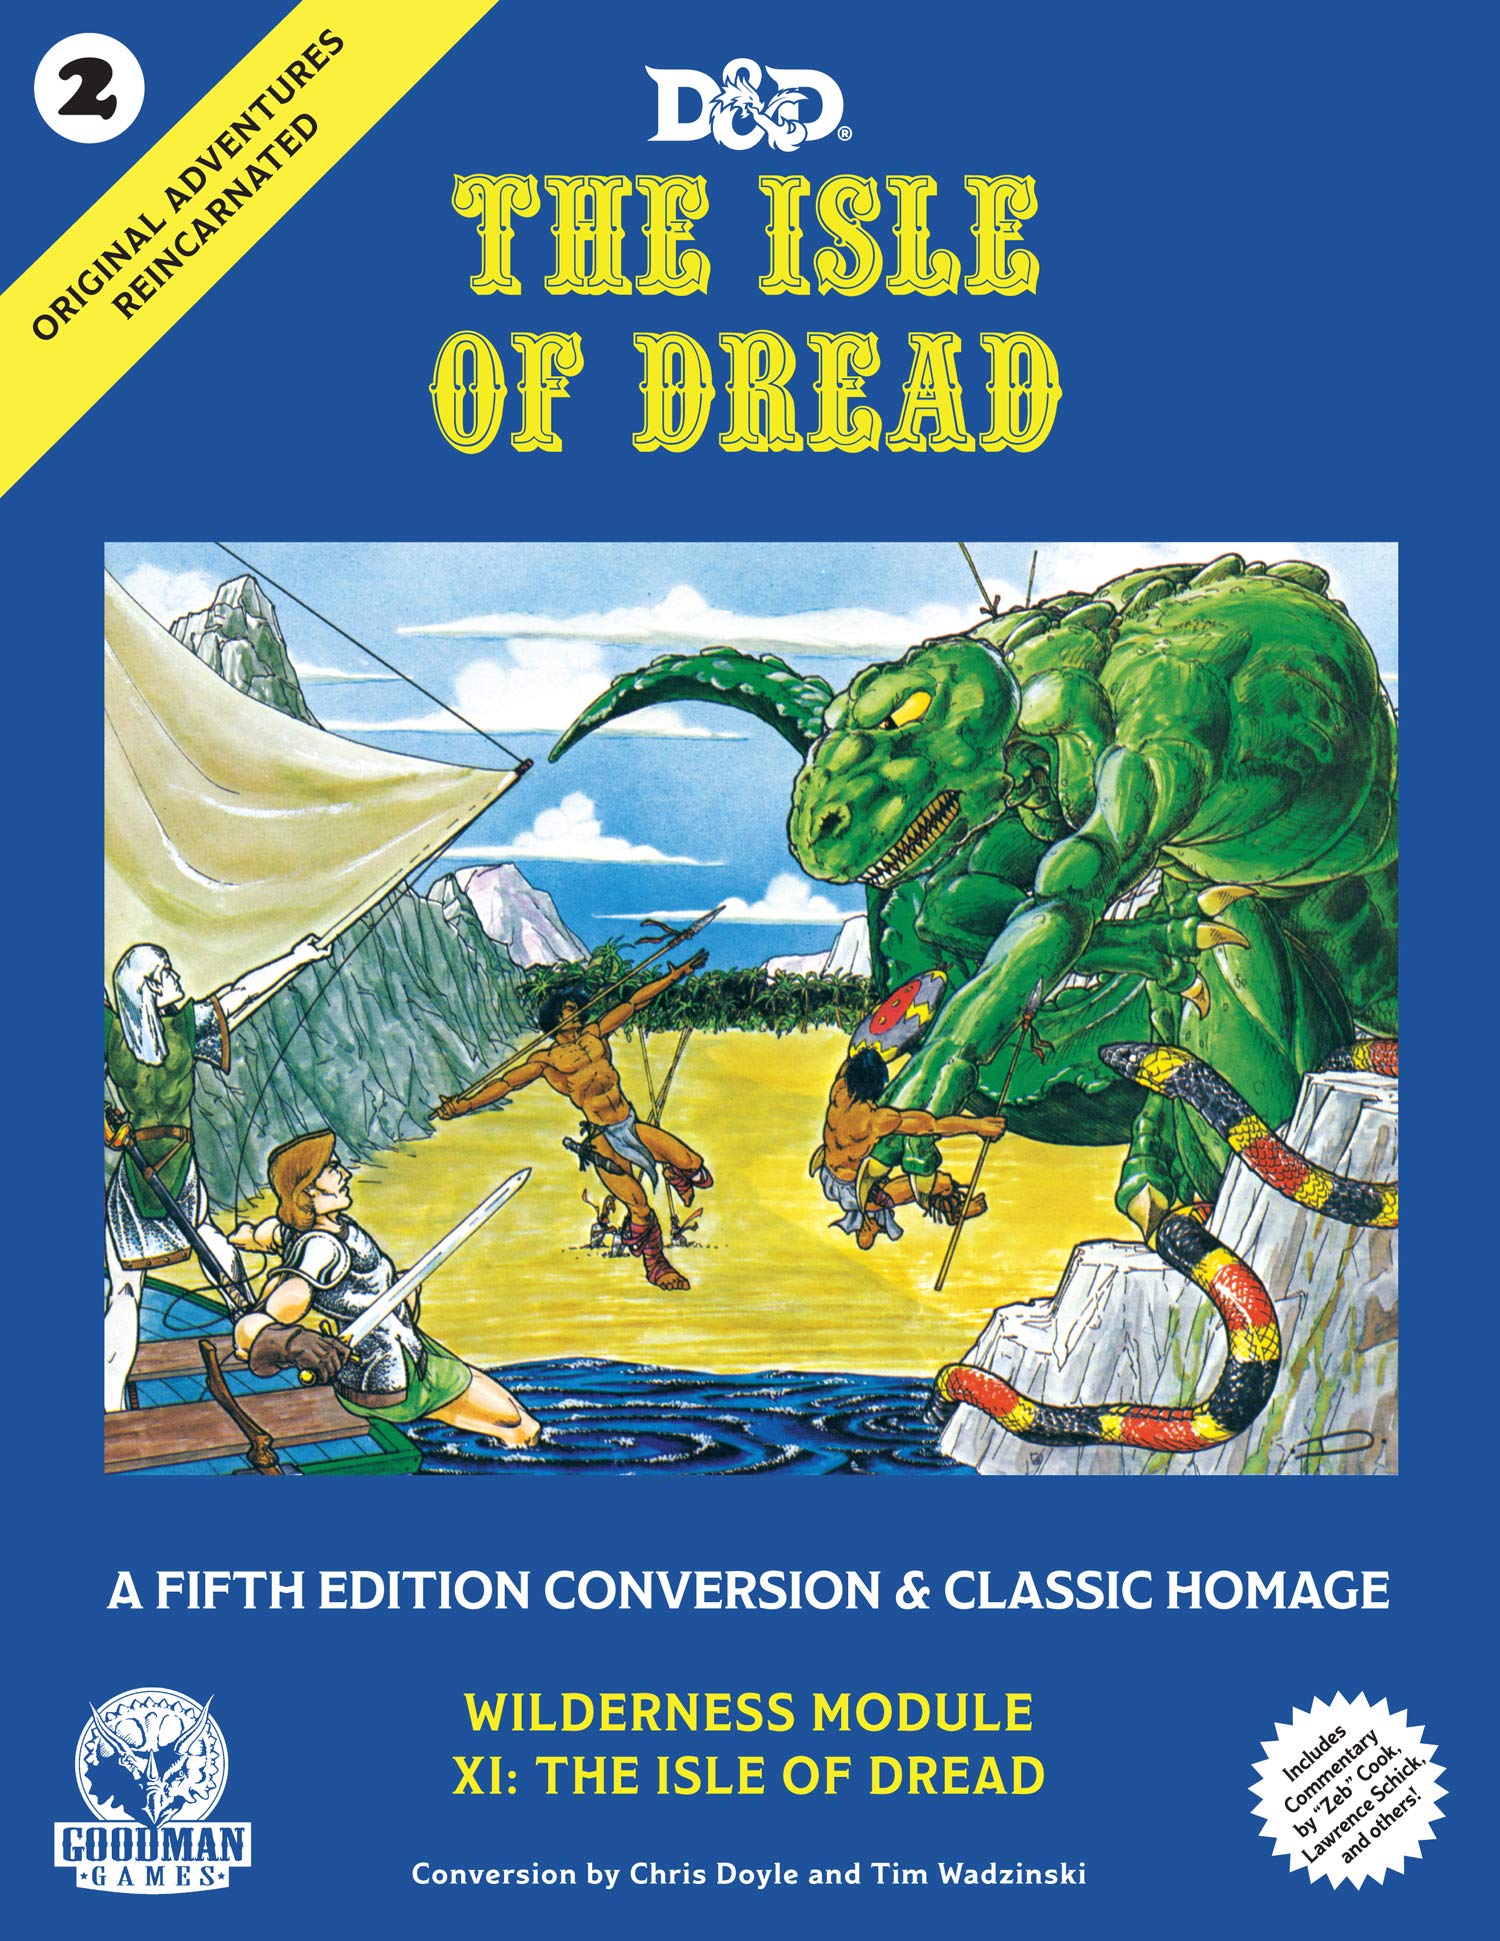 D&D RPG: Original Adventures Reincarnated #2: The Isle of Dread